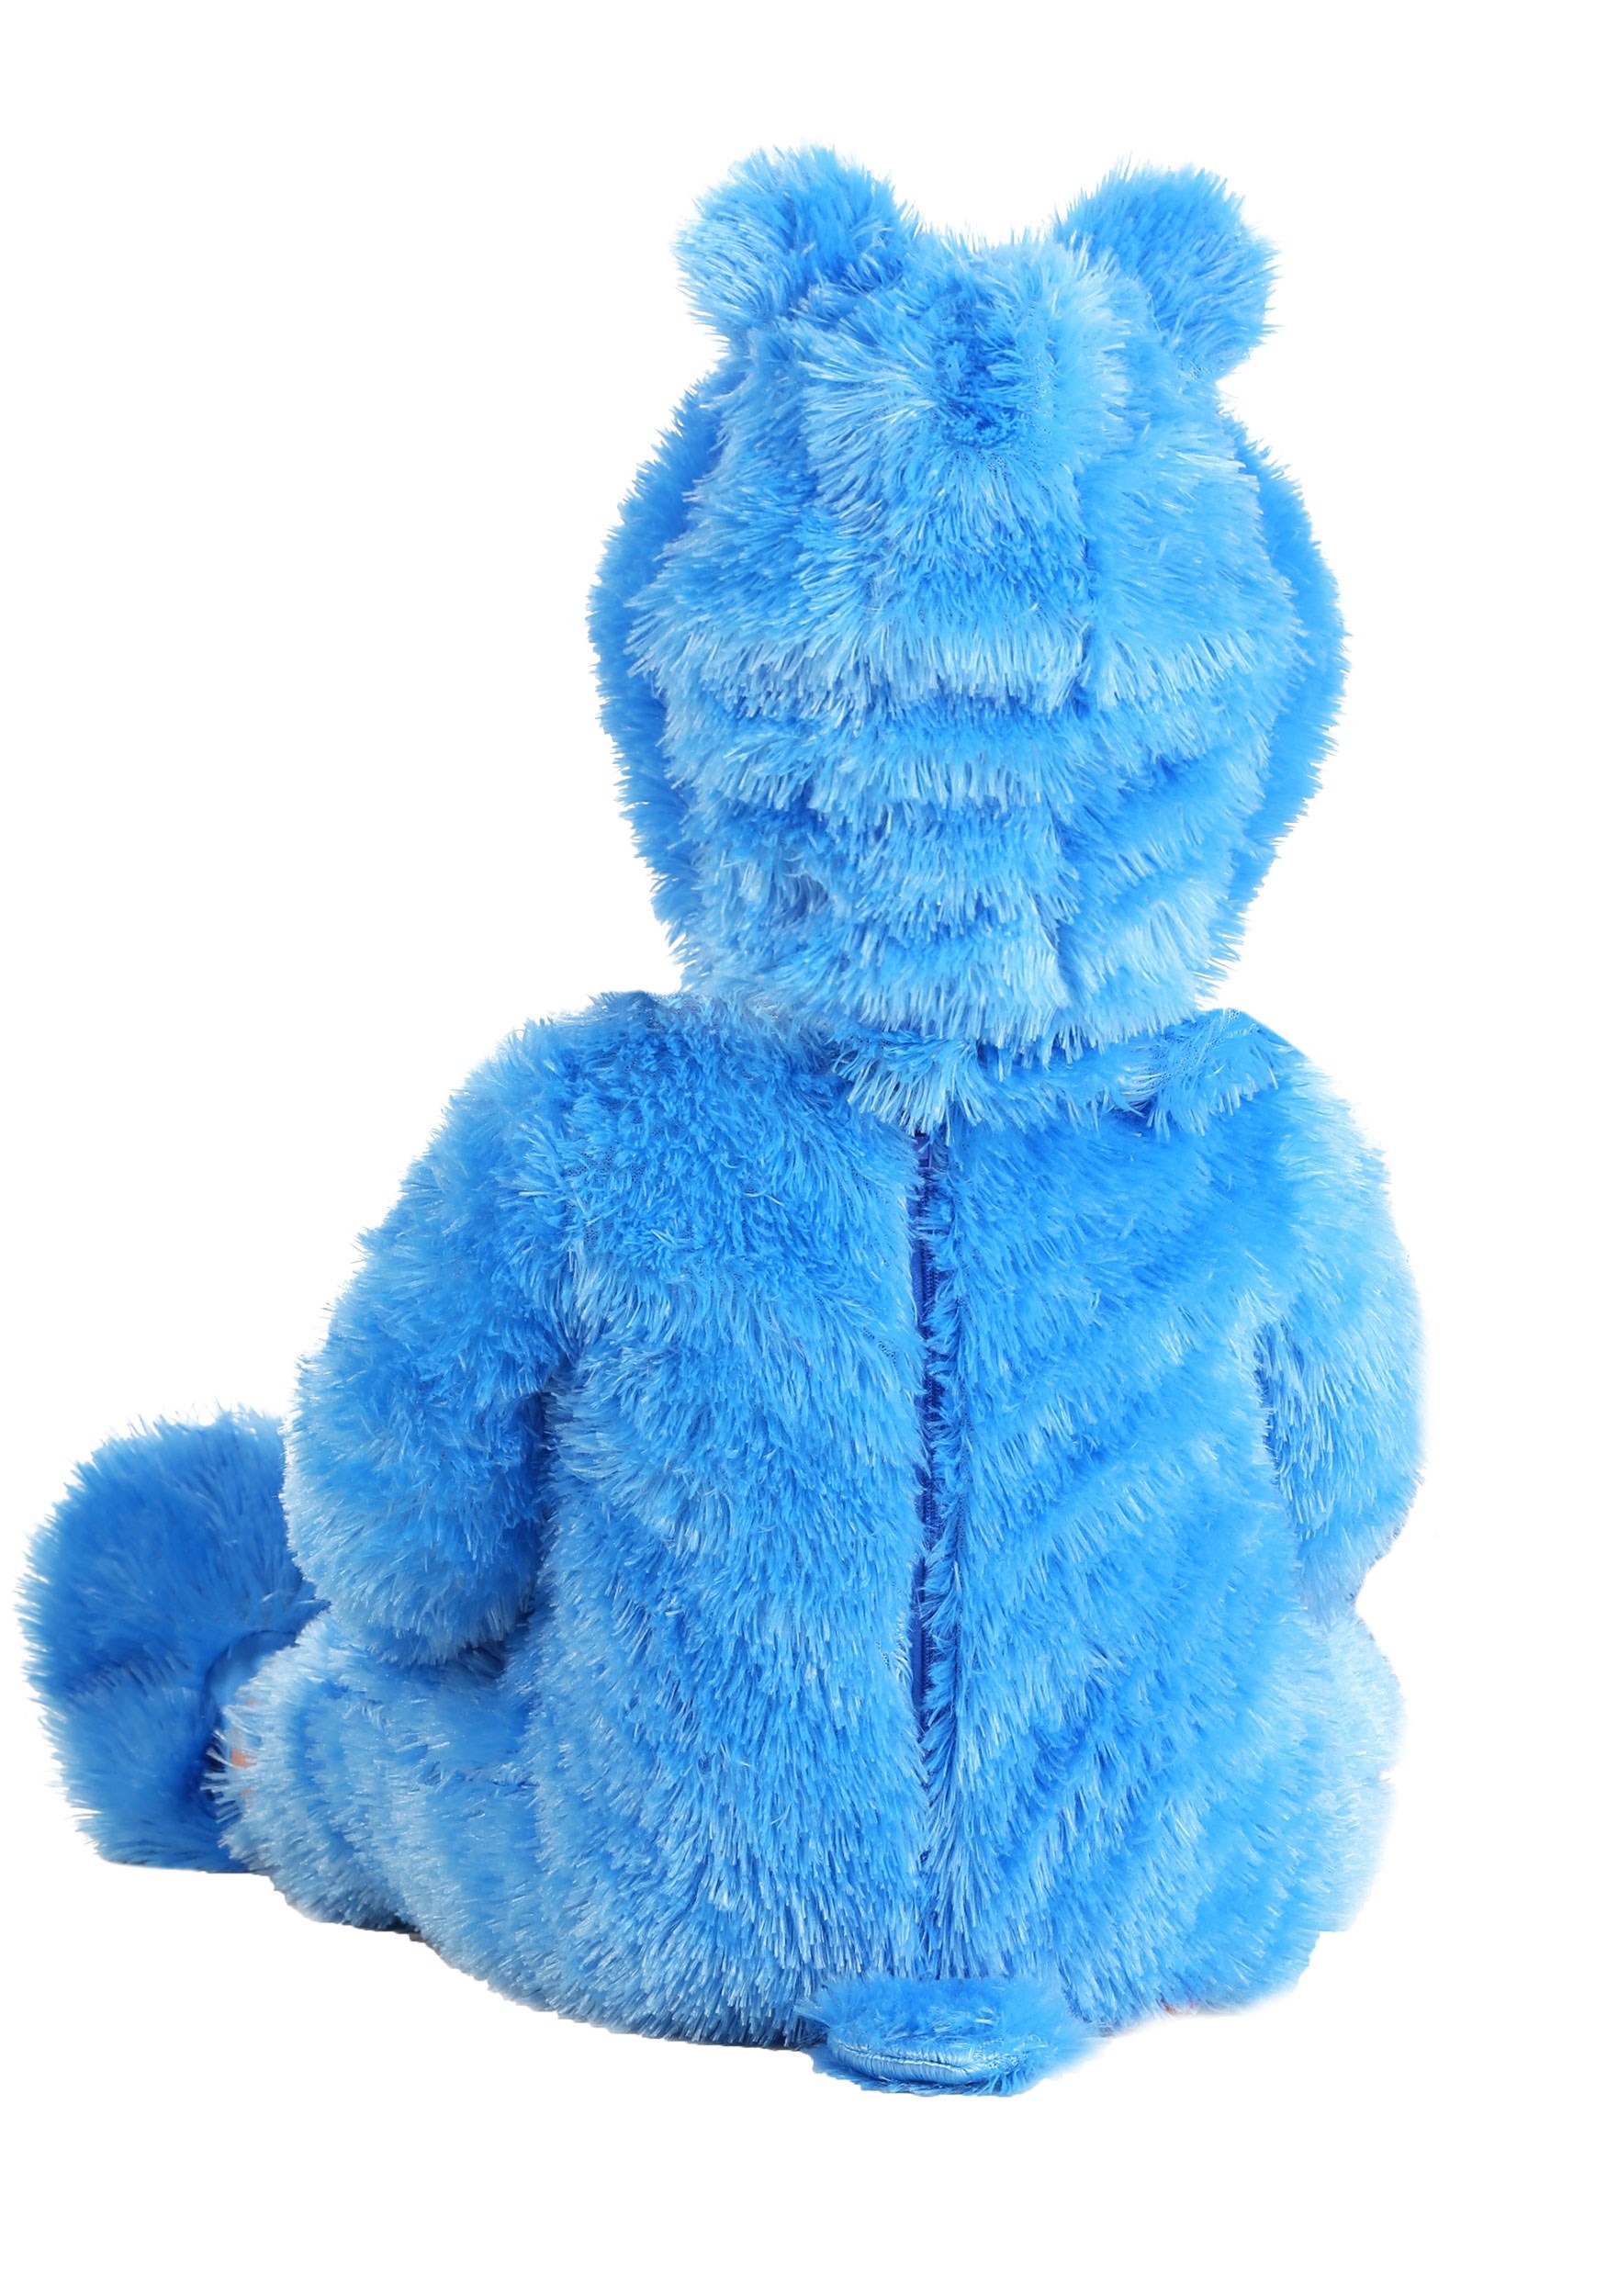 Grumpy Bear Infant Care Bear Costume